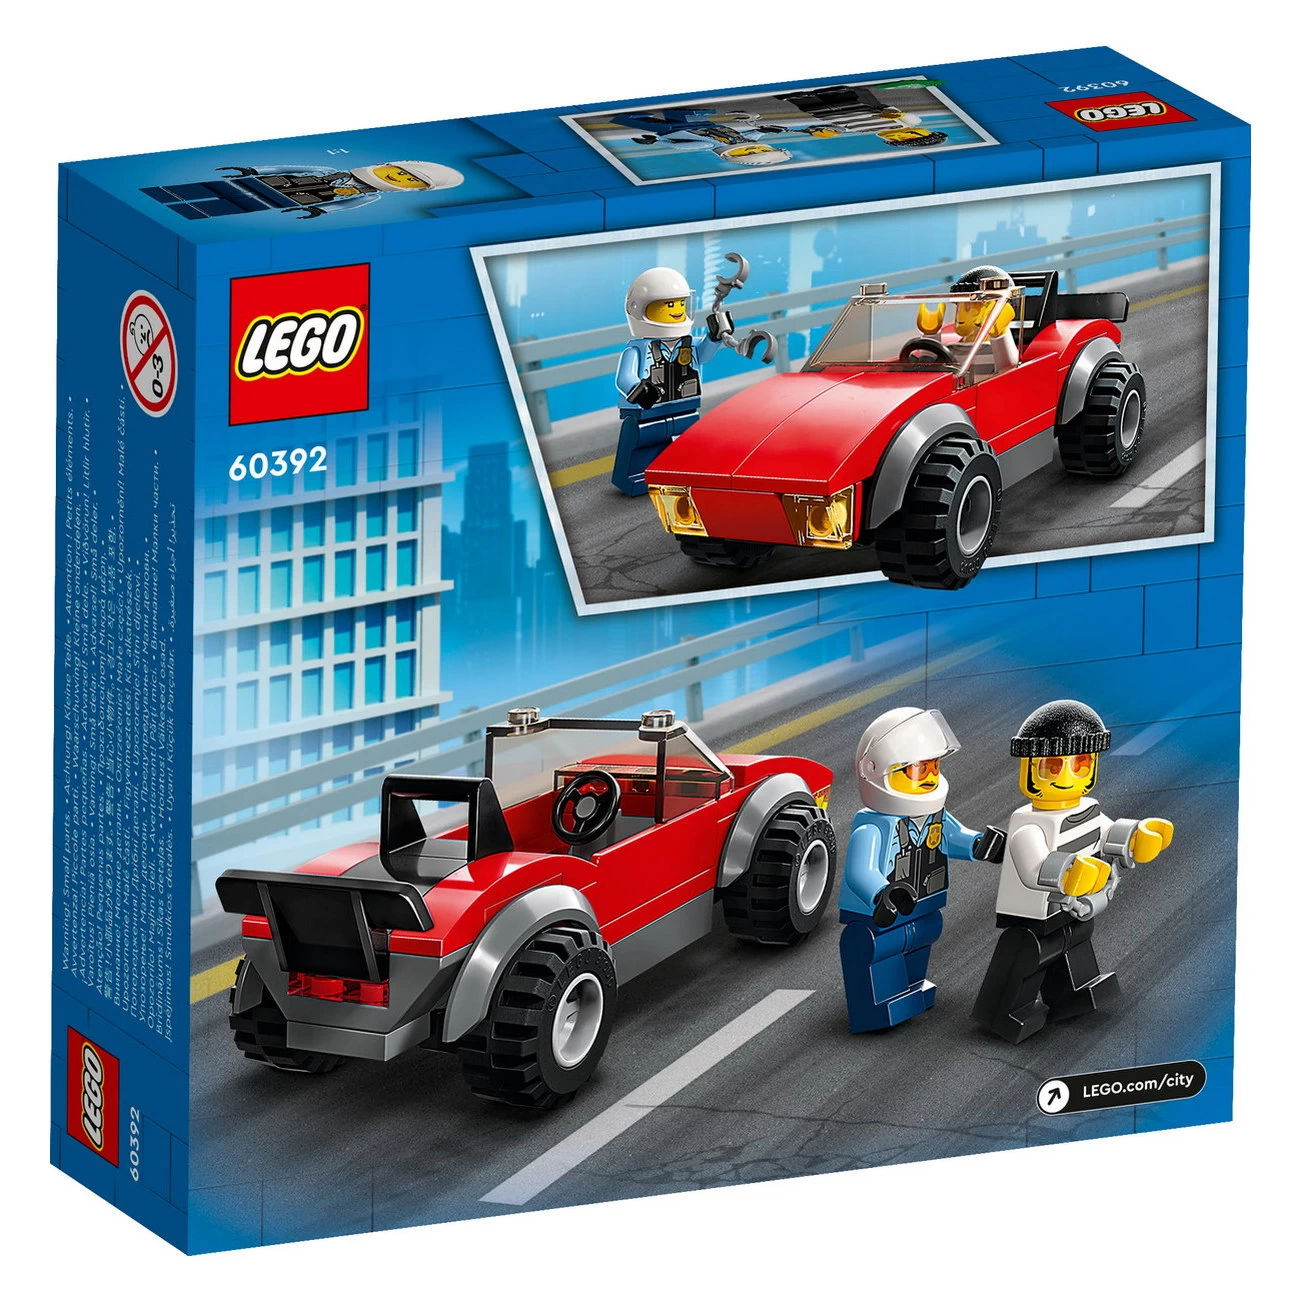 LEGO City 60392 - Verfolgungsjagd mit dem Polizeimotorrad